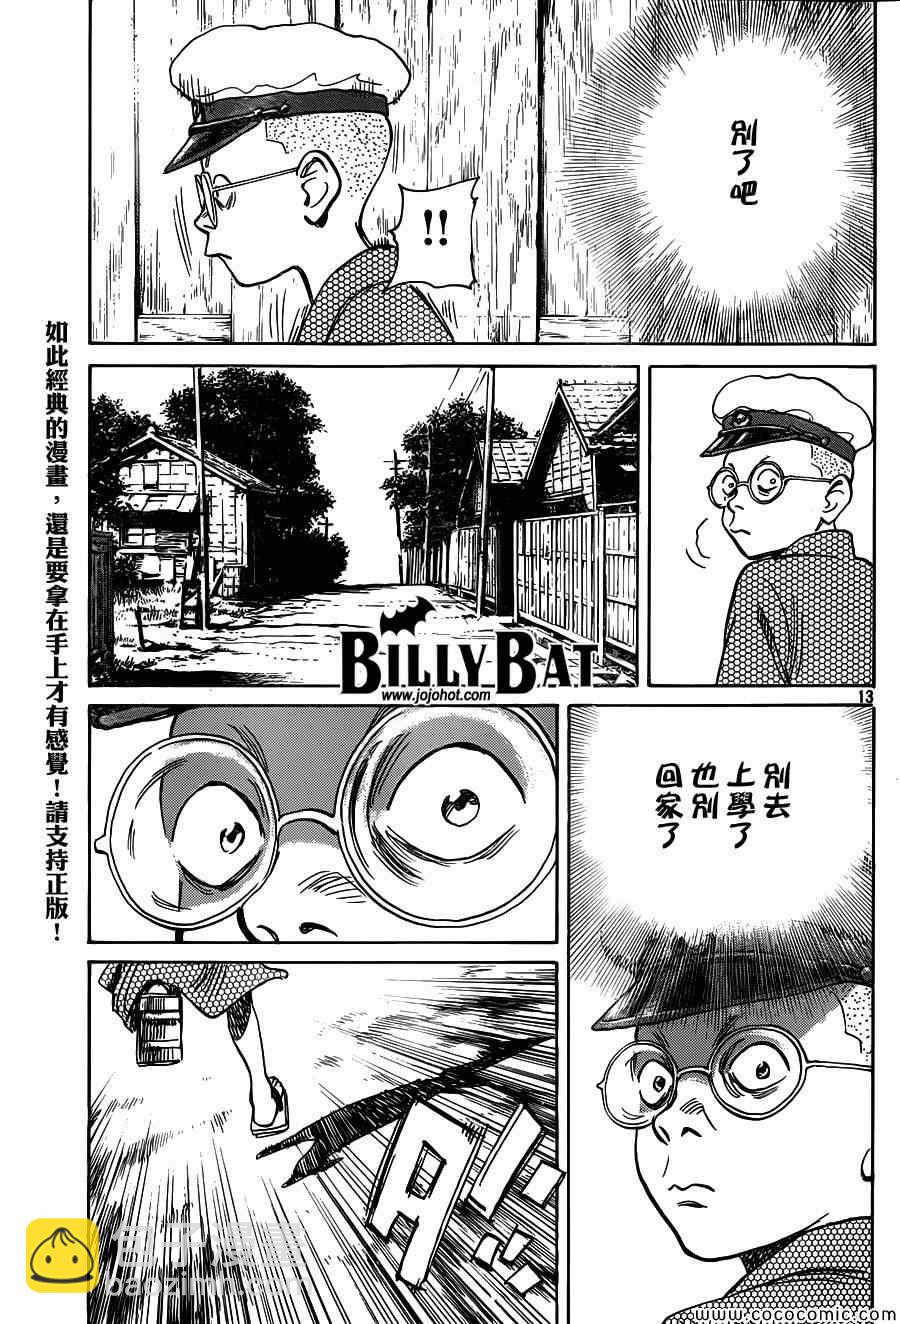 Billy_Bat - 第107話 - 3